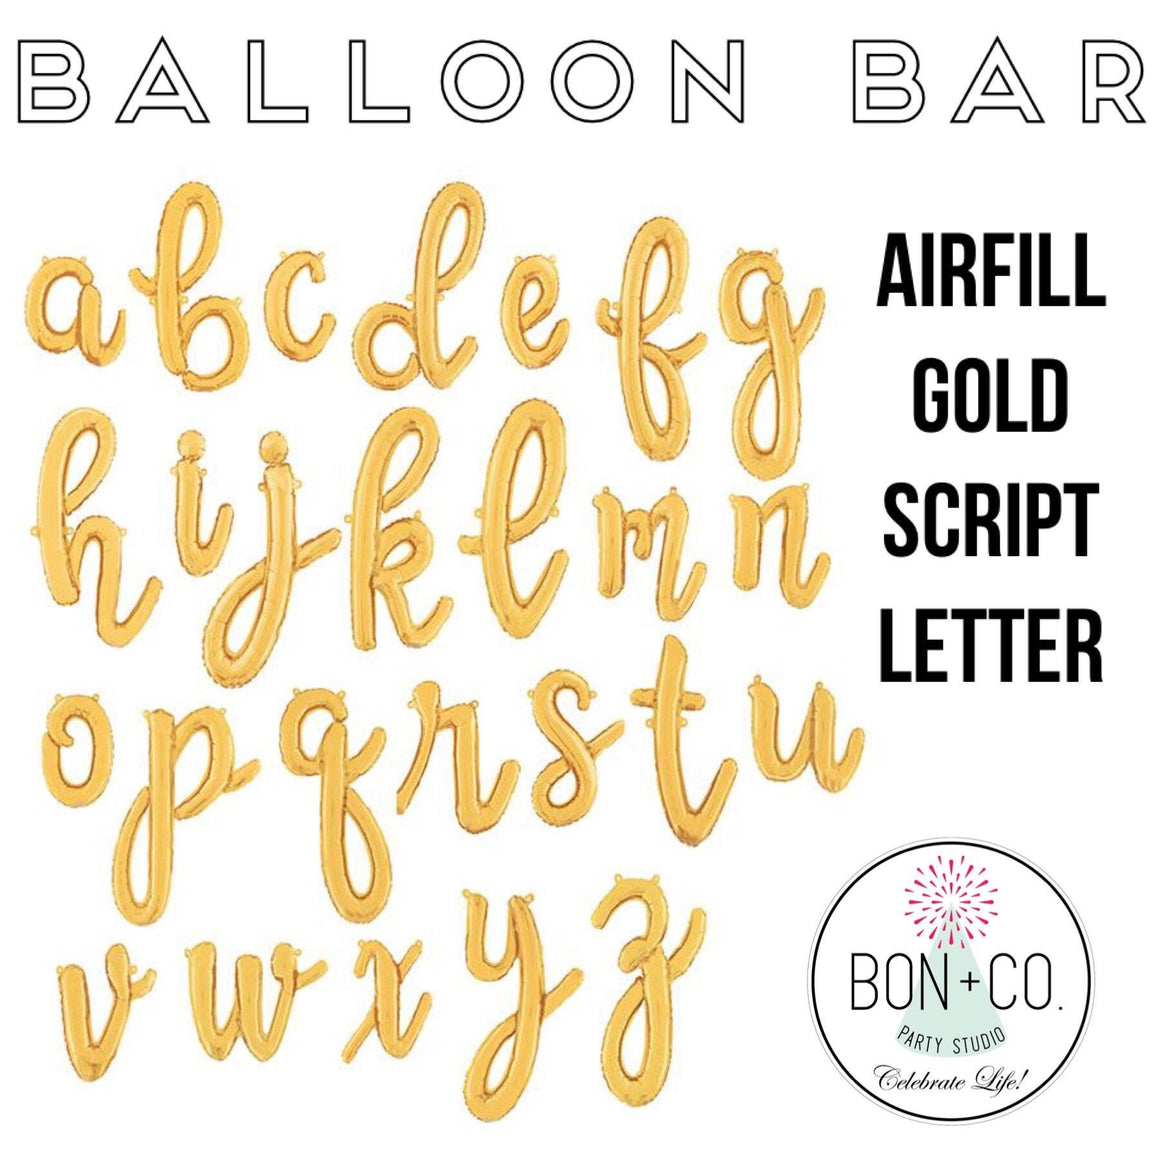 BALLOON BAR - 14" AIRFILL GOLD SCRIPT LETTERS, Balloons, BETALLIC - Bon + Co. Party Studio